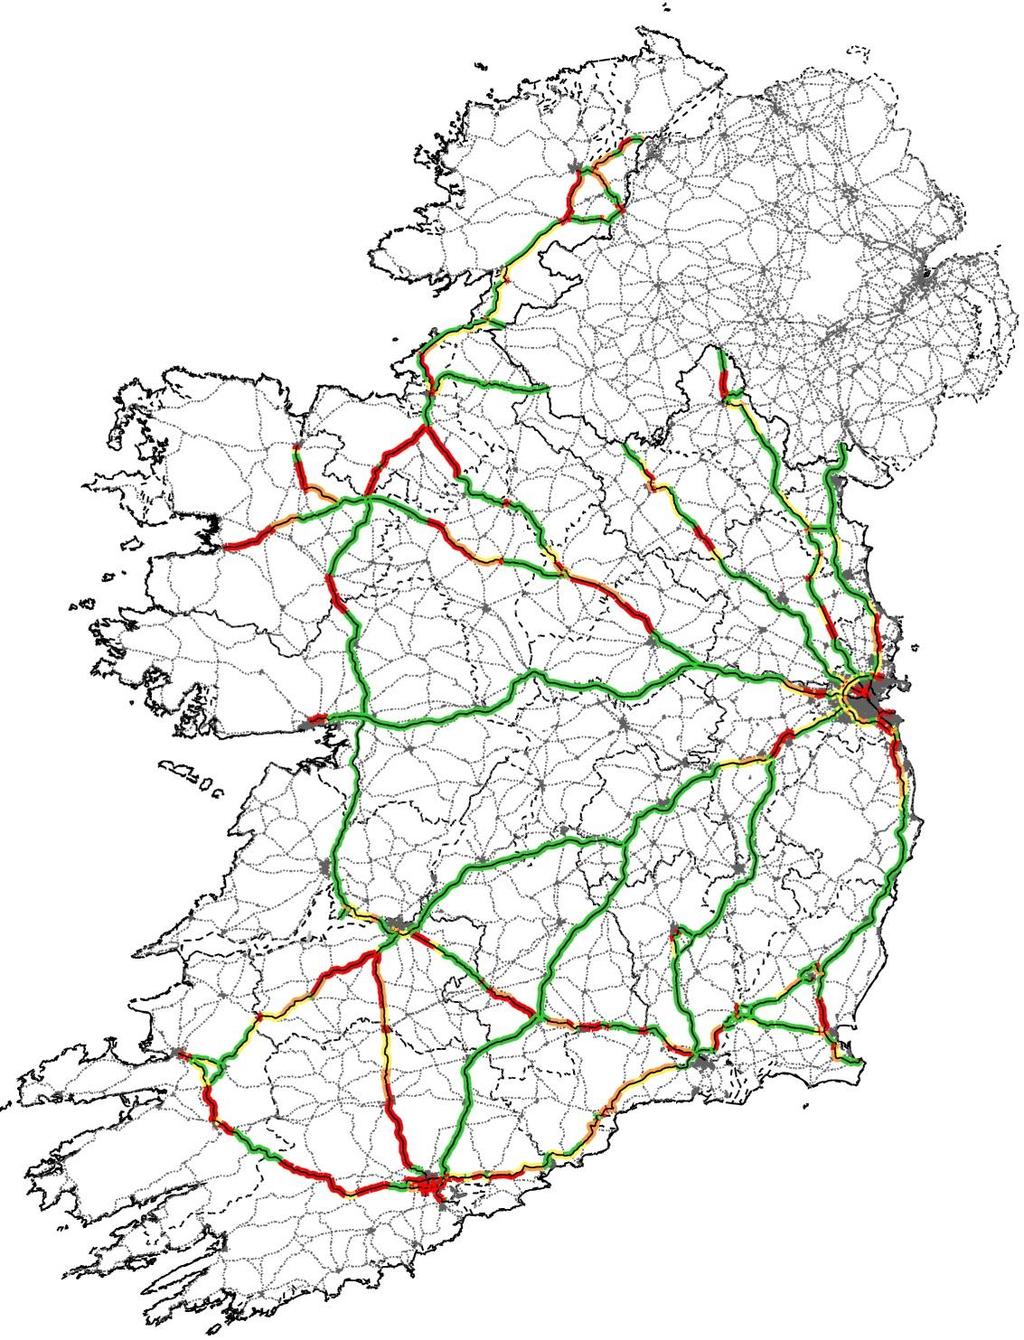 Motorway & National Primary Network (2030 AADT Flows / NRA TD9 LoS Capacity)) Motorway / National Primary Schemes with Approvals (included in Capital Plan): 1. N7 Naas Newbridge 2.